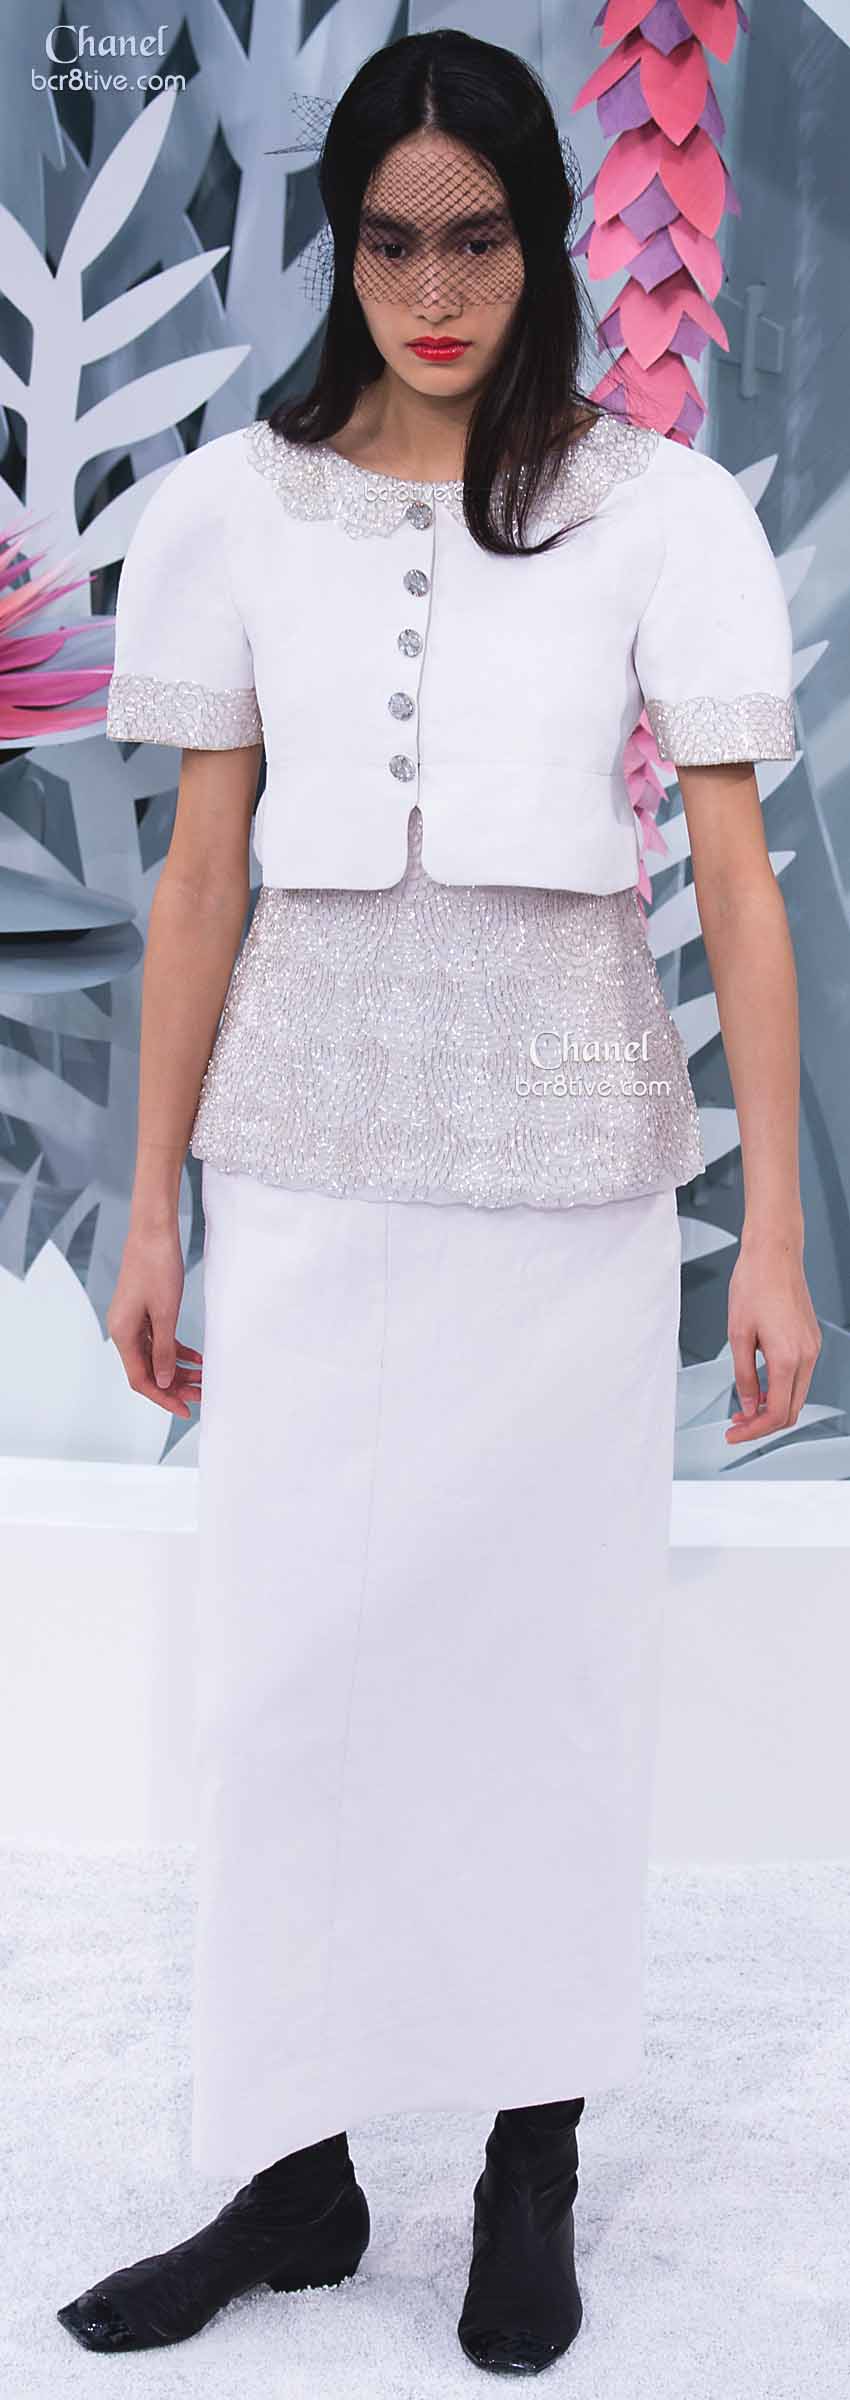 Delicate Chanel Couture